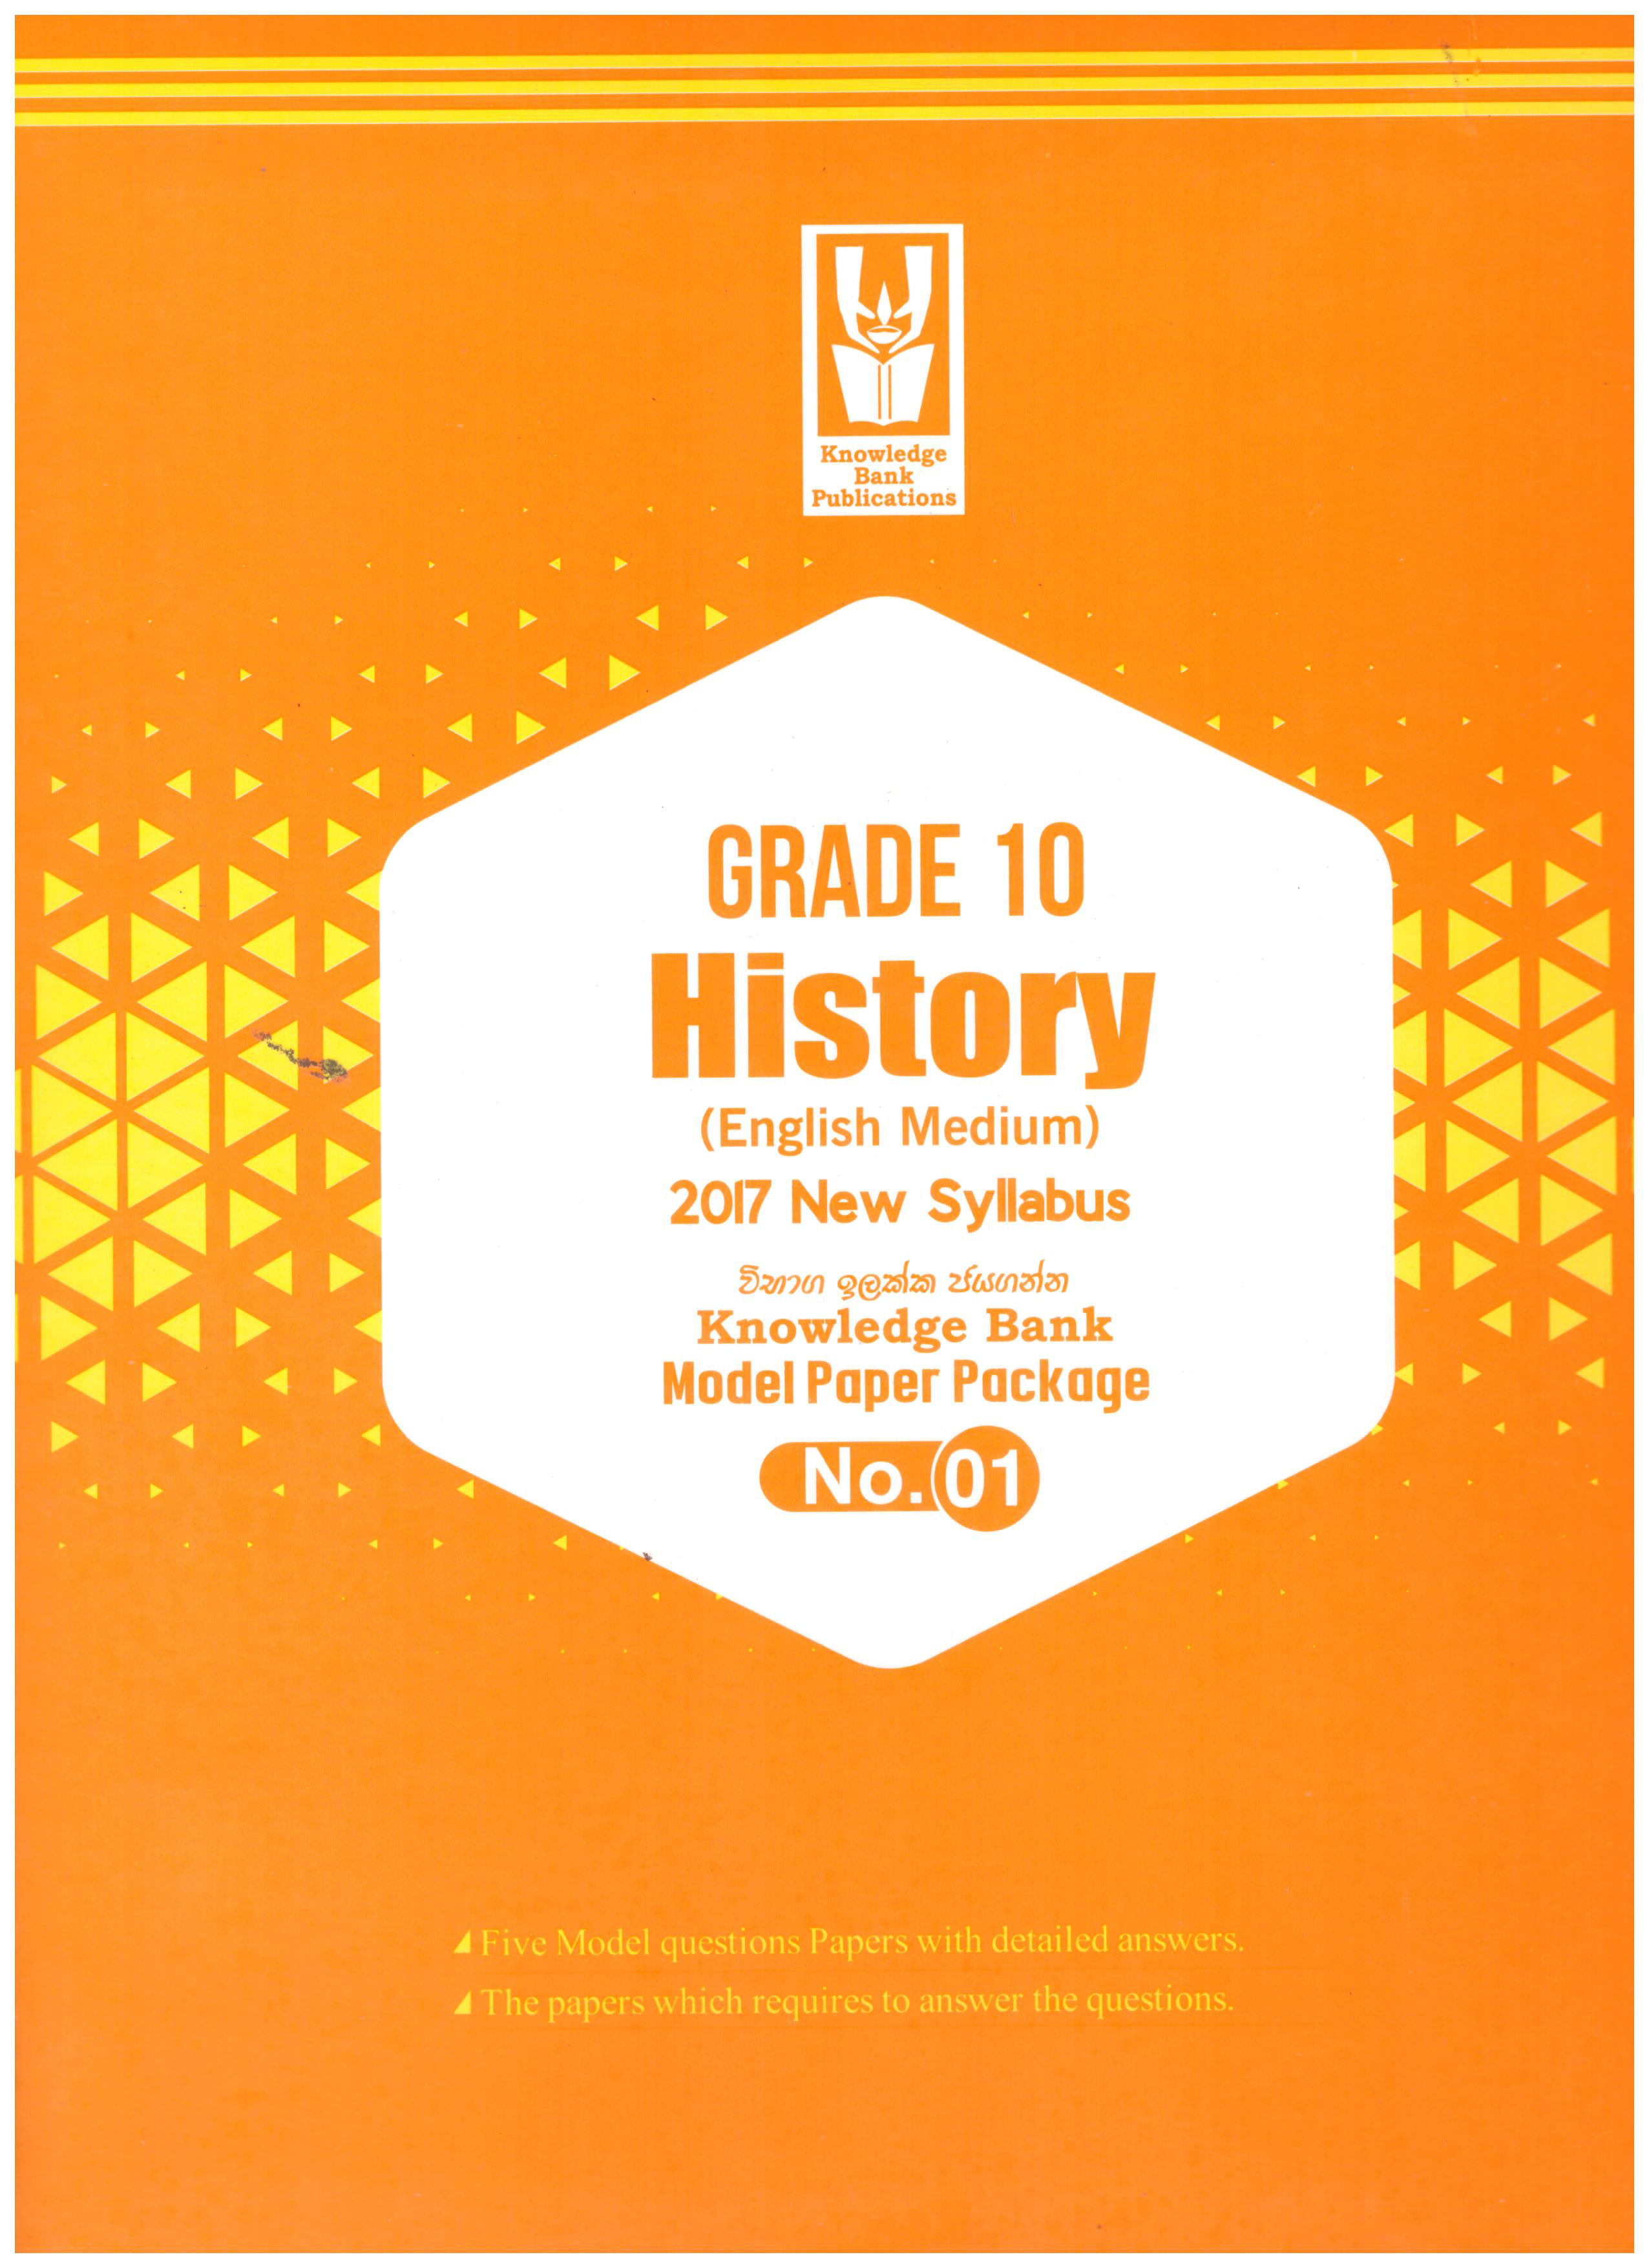 Knowledge Bank Grade 10 History No 01 Model Paper Package ( New Syllabus )